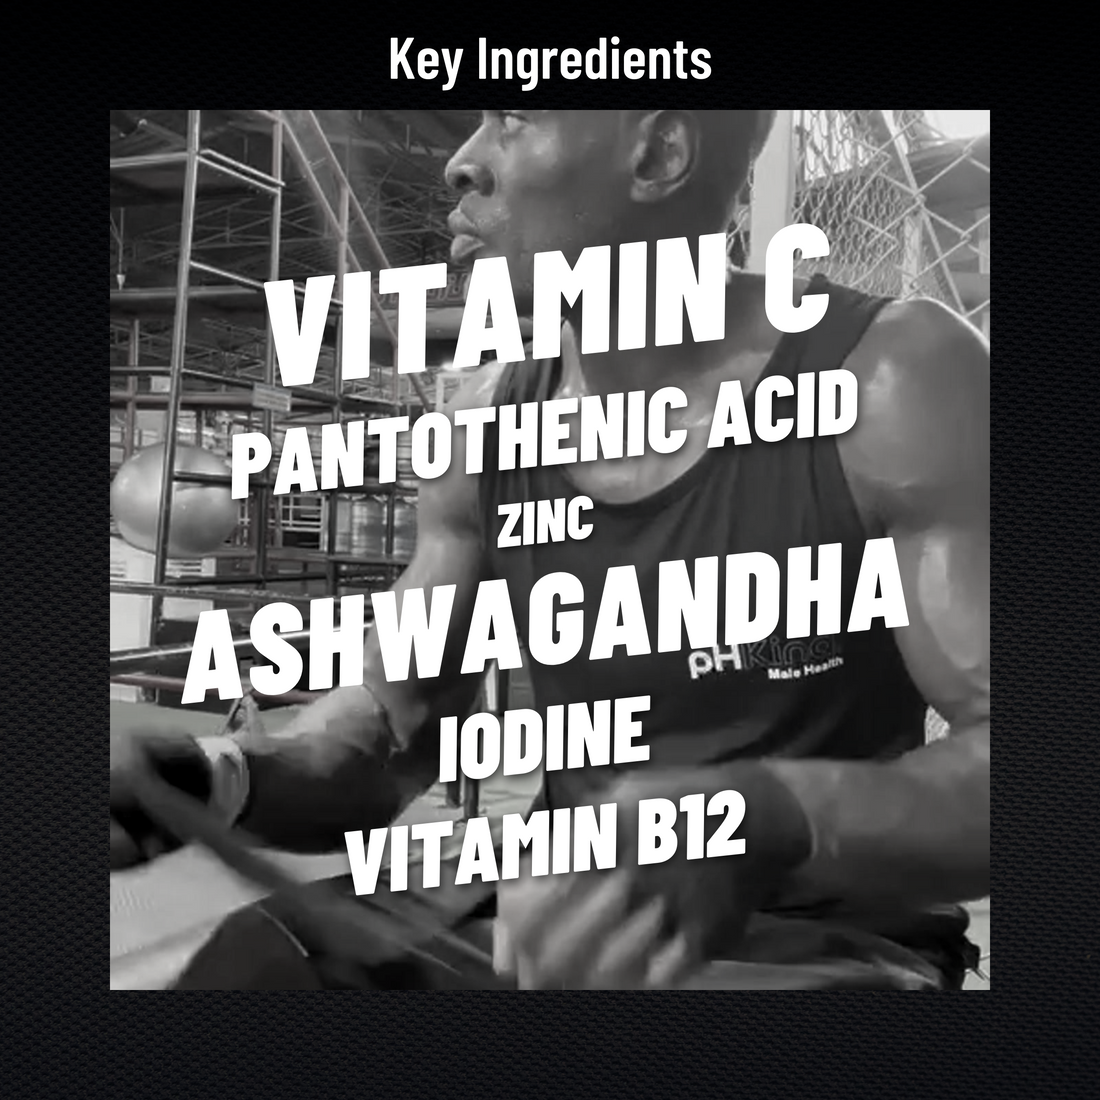 pHKind Mind Health Formula (30 Vegan Capsules)